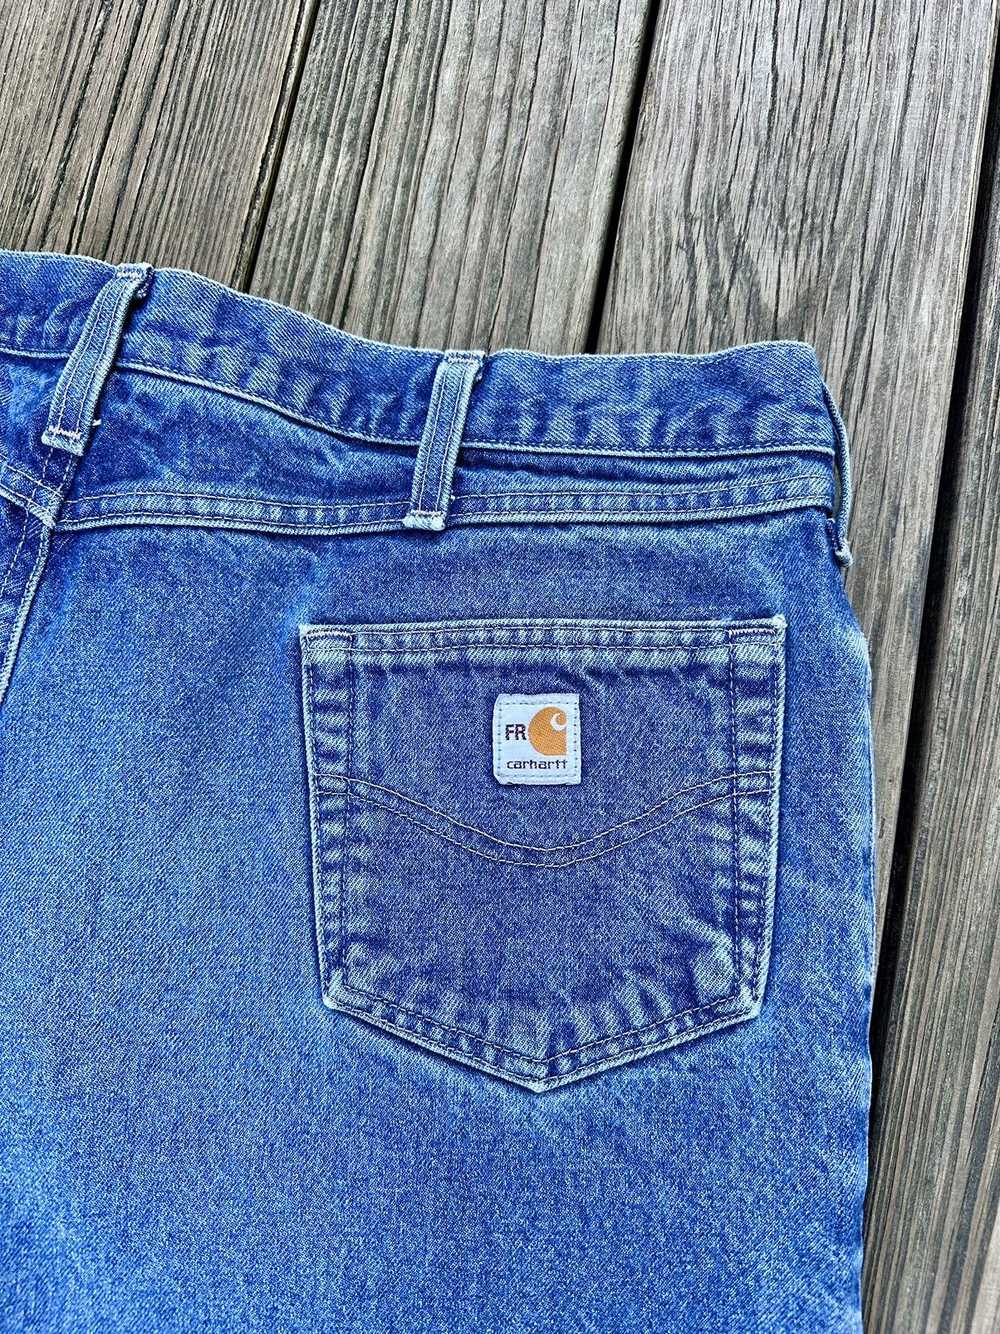 Carhartt Carhartt Fire Resistant Jeans - image 2